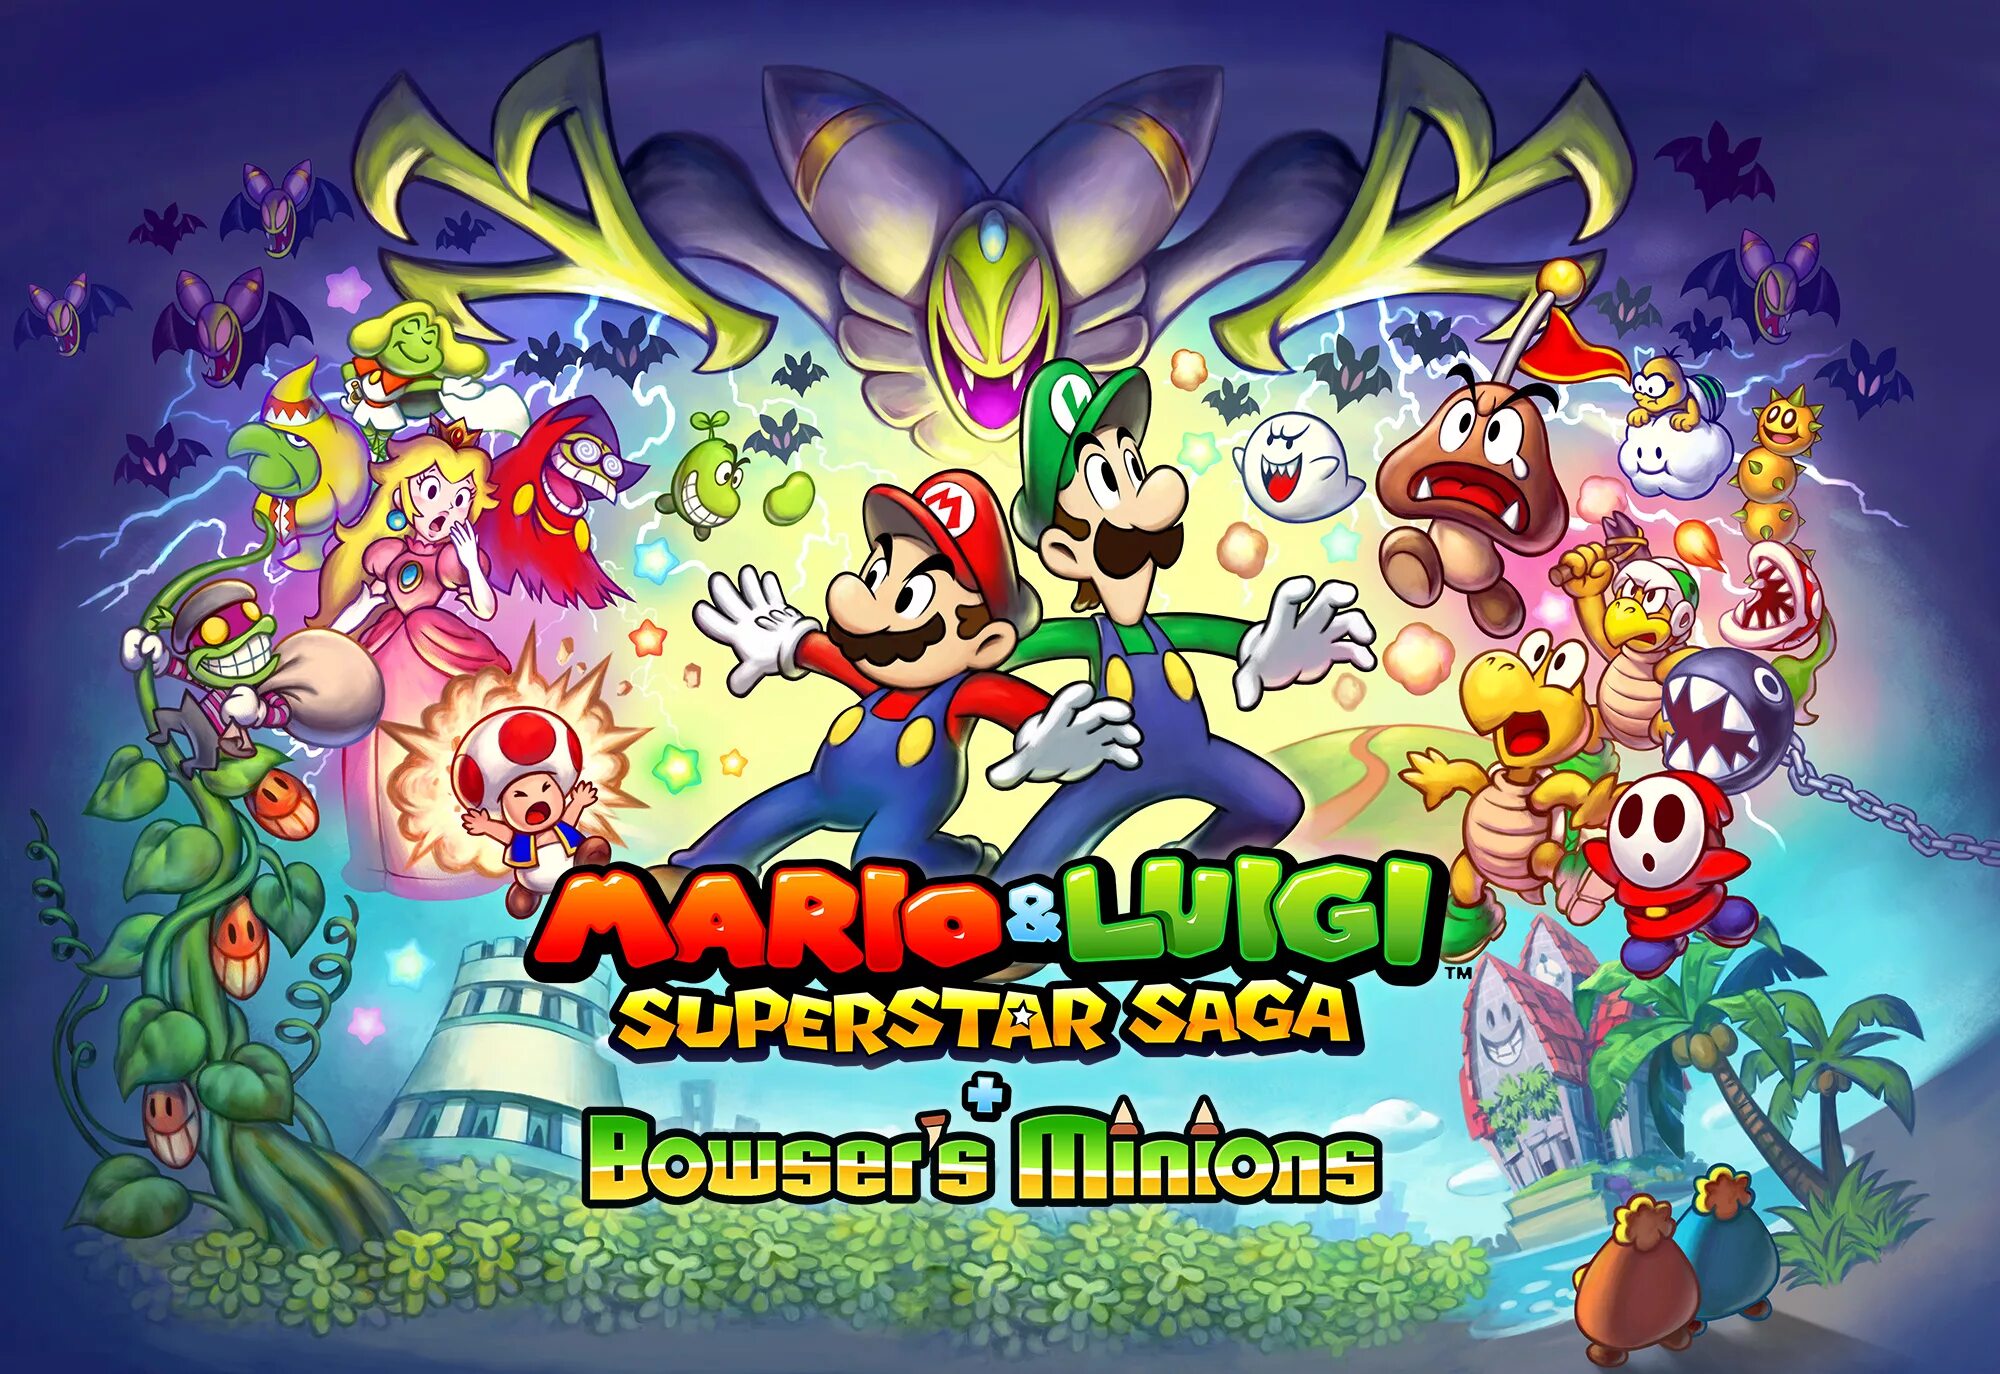 Mario and Luigi Superstar Saga. Mario and Luigi RPG. Mario & Luigi: Superstar Saga + Bowser's Minions. Mario and Luigi super Star Saga 3ds.